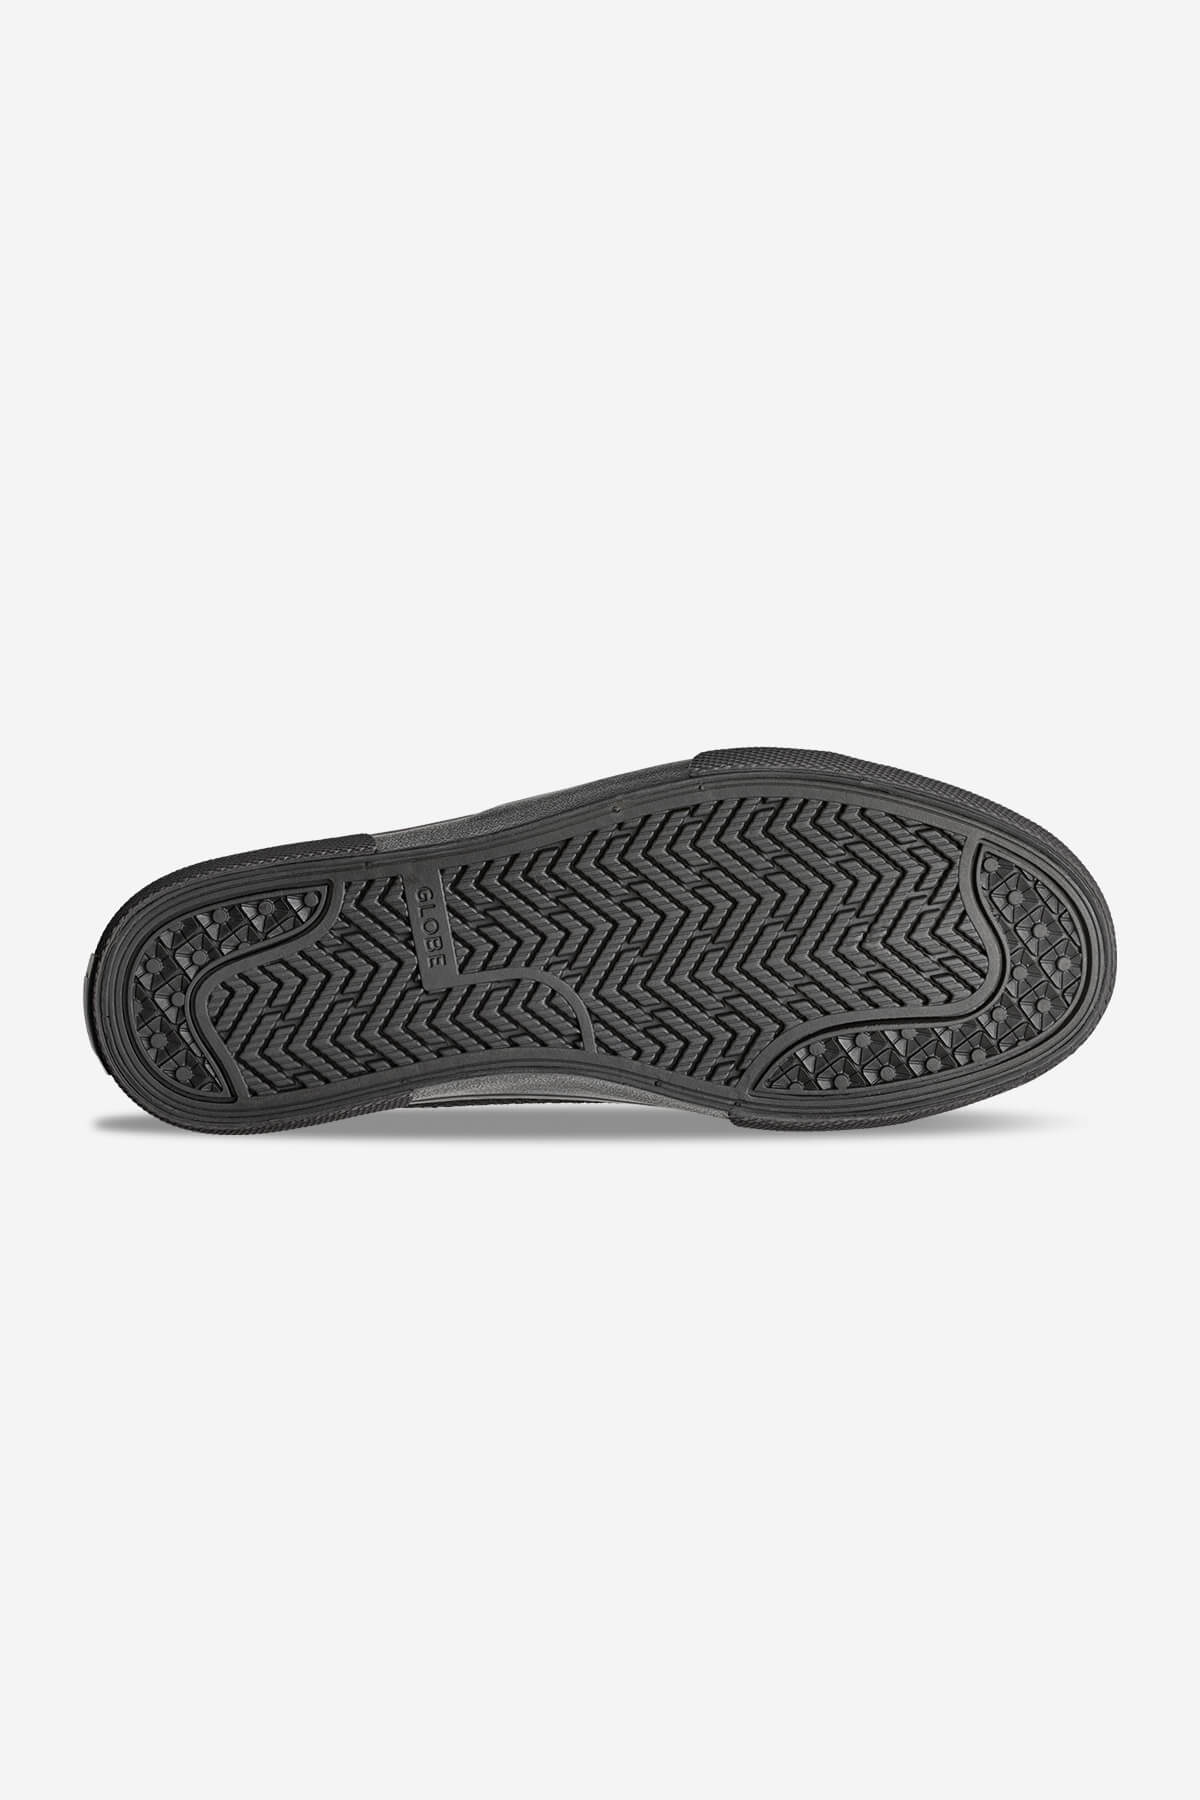 Globe - Surplus - Knit Black/Knit/Black - Skate Shoes